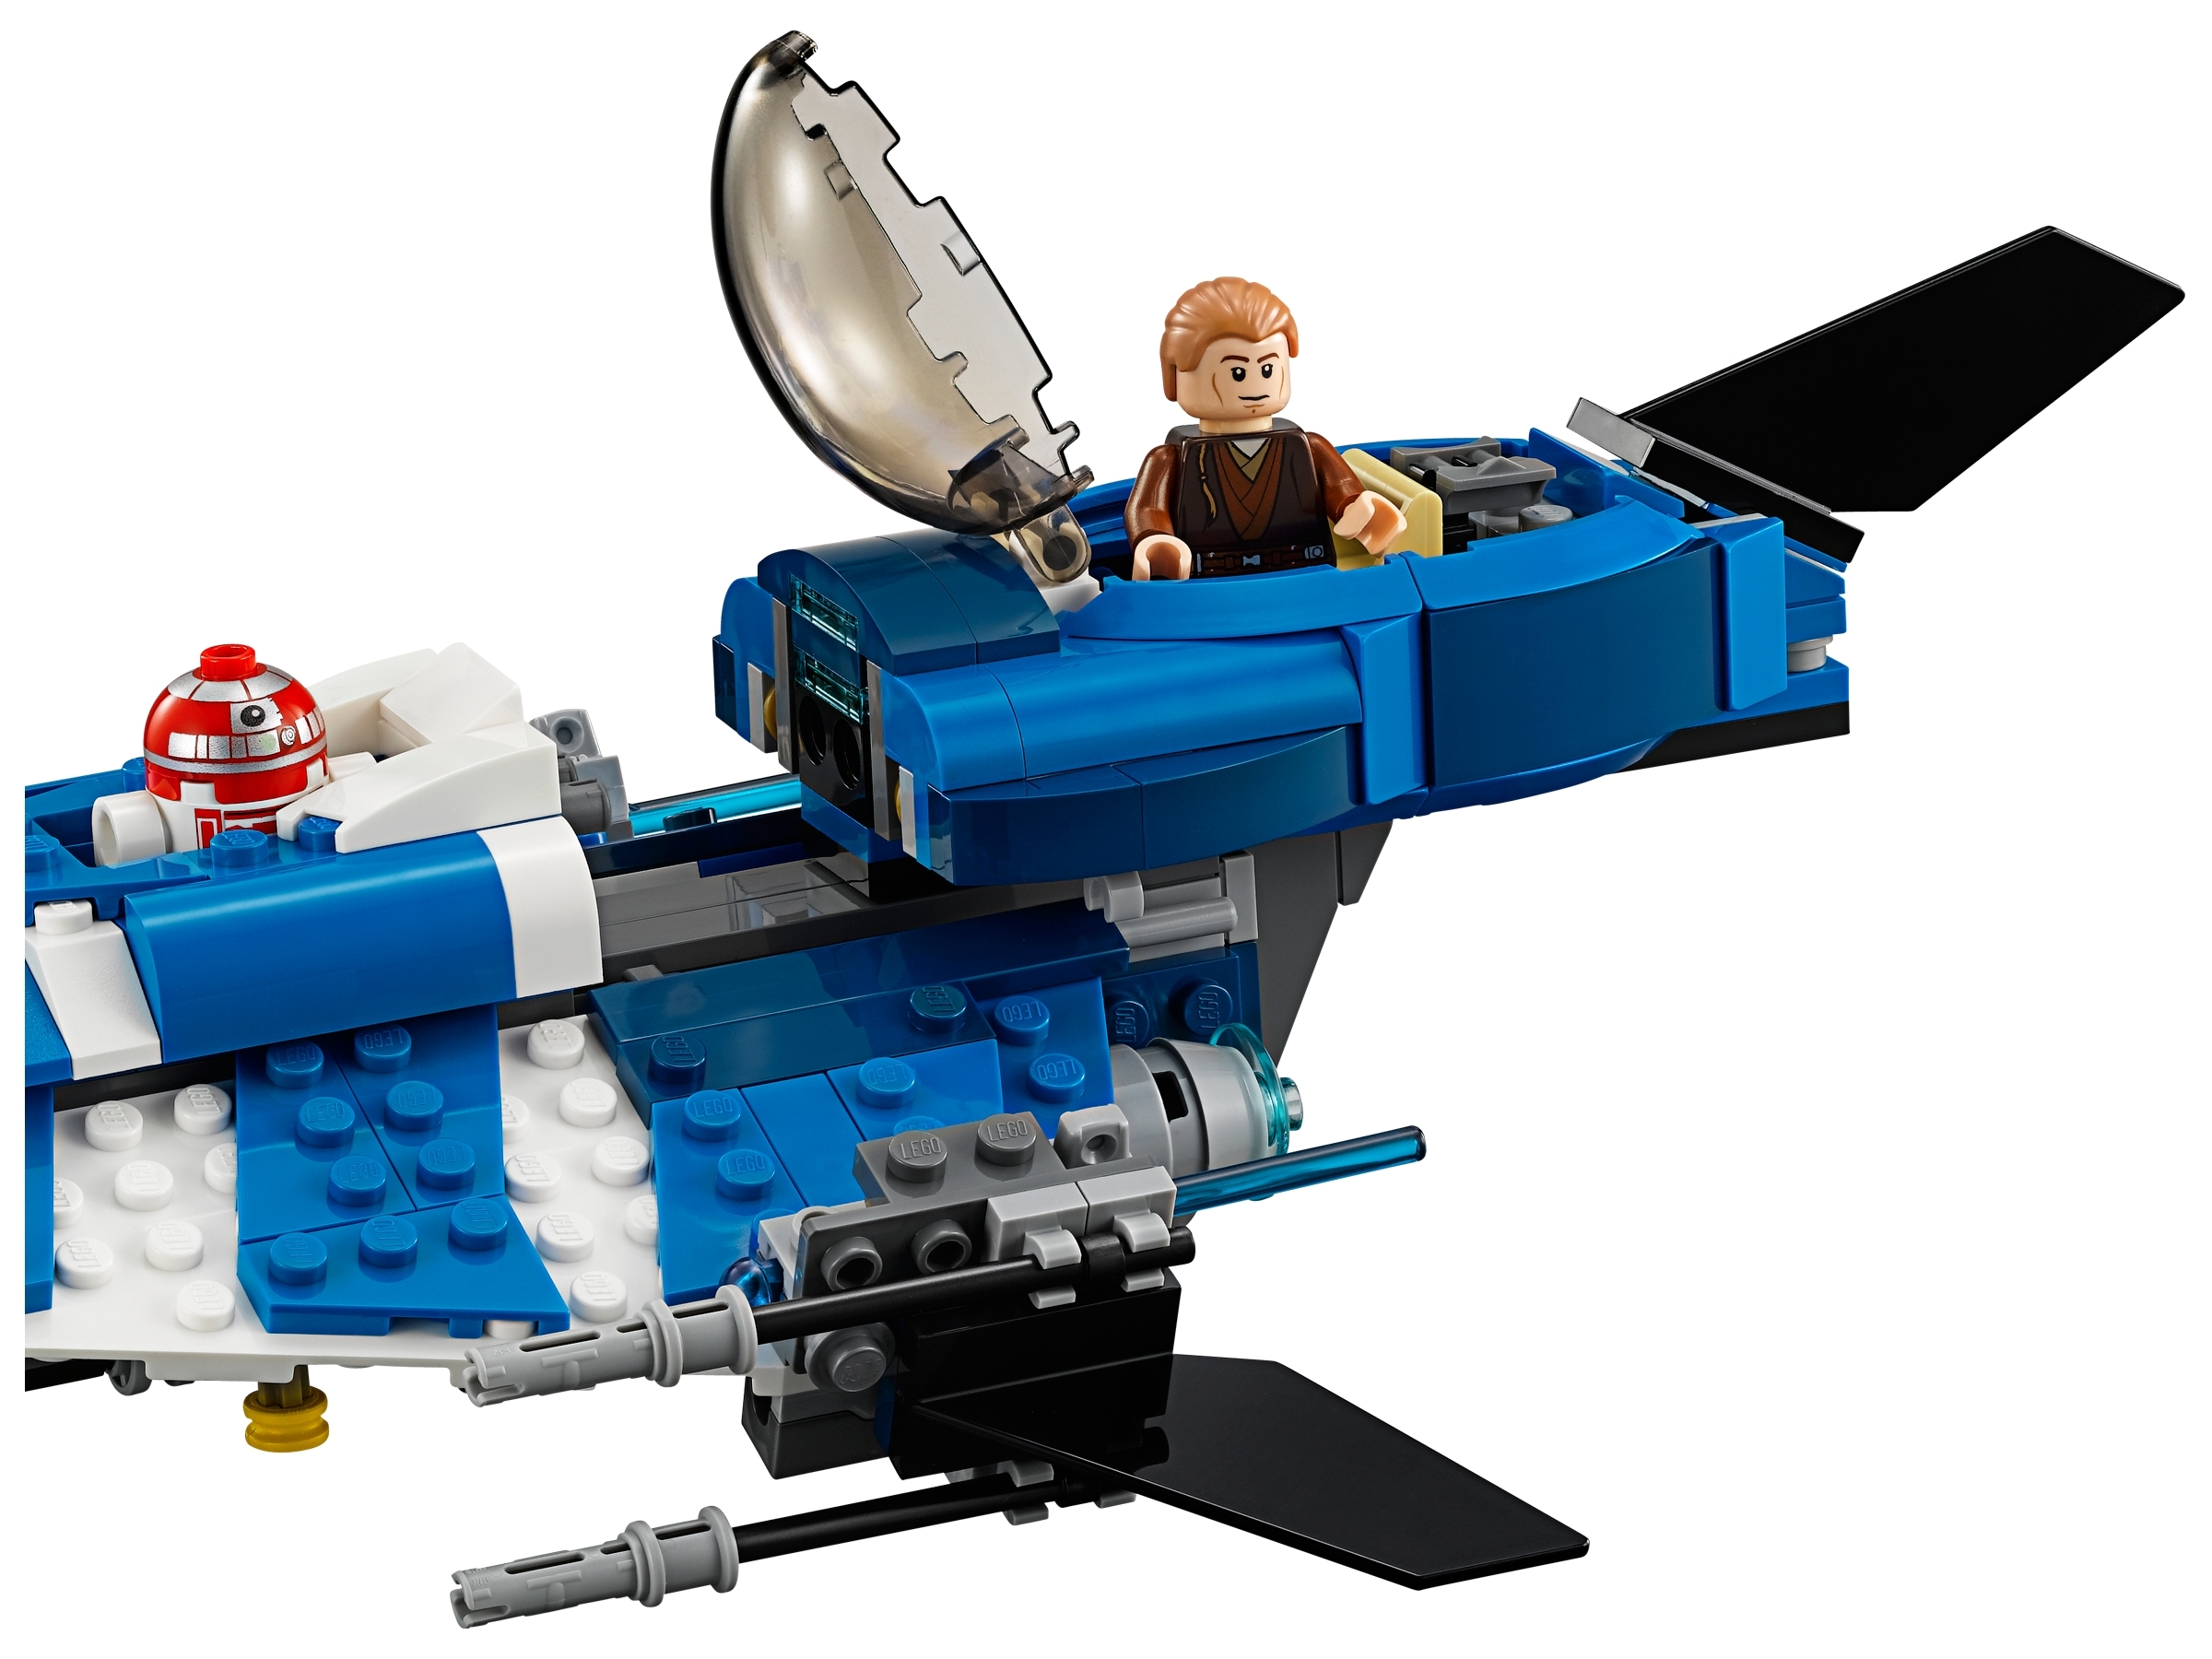 Blue Jedi Starfighter Lego | tunersread.com